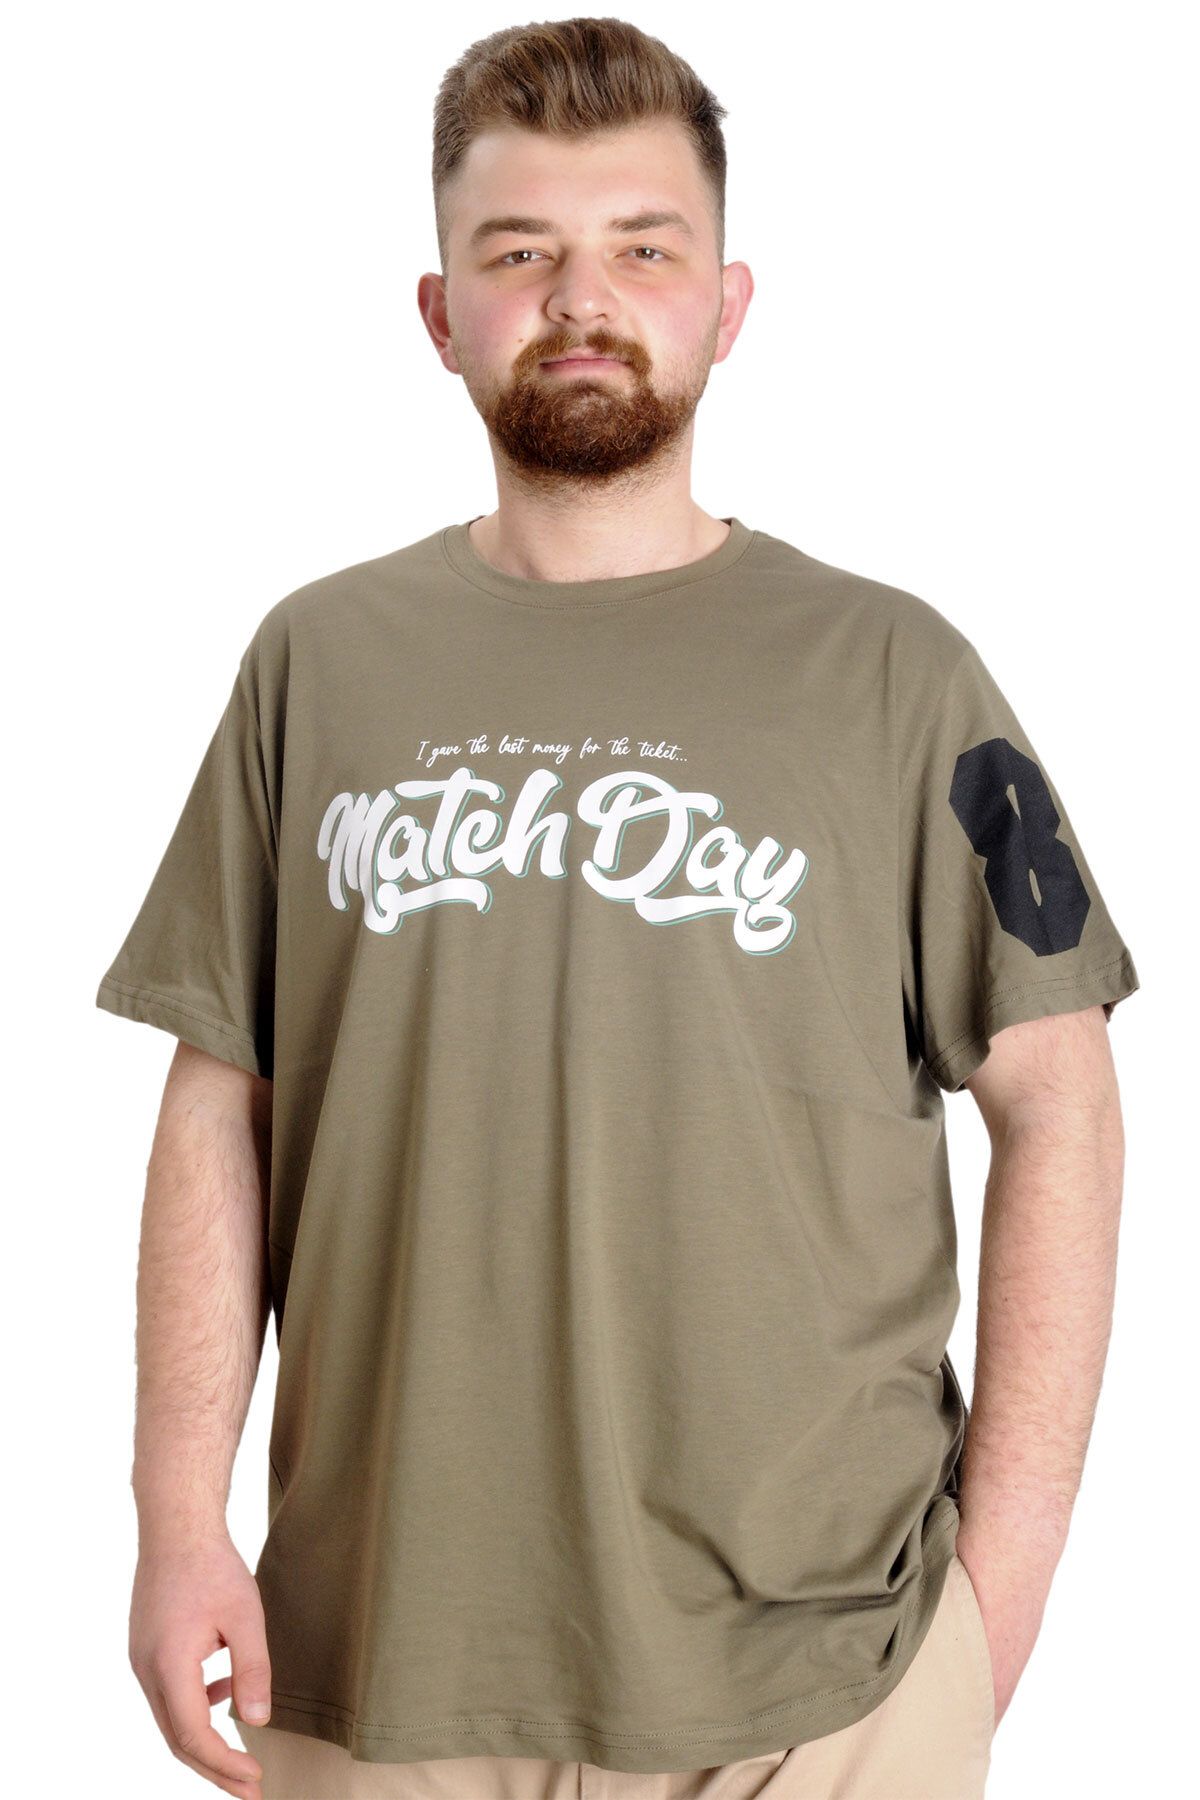 Modexl Büyük Beden Erkek T-shirt Match Day 23155 Haki